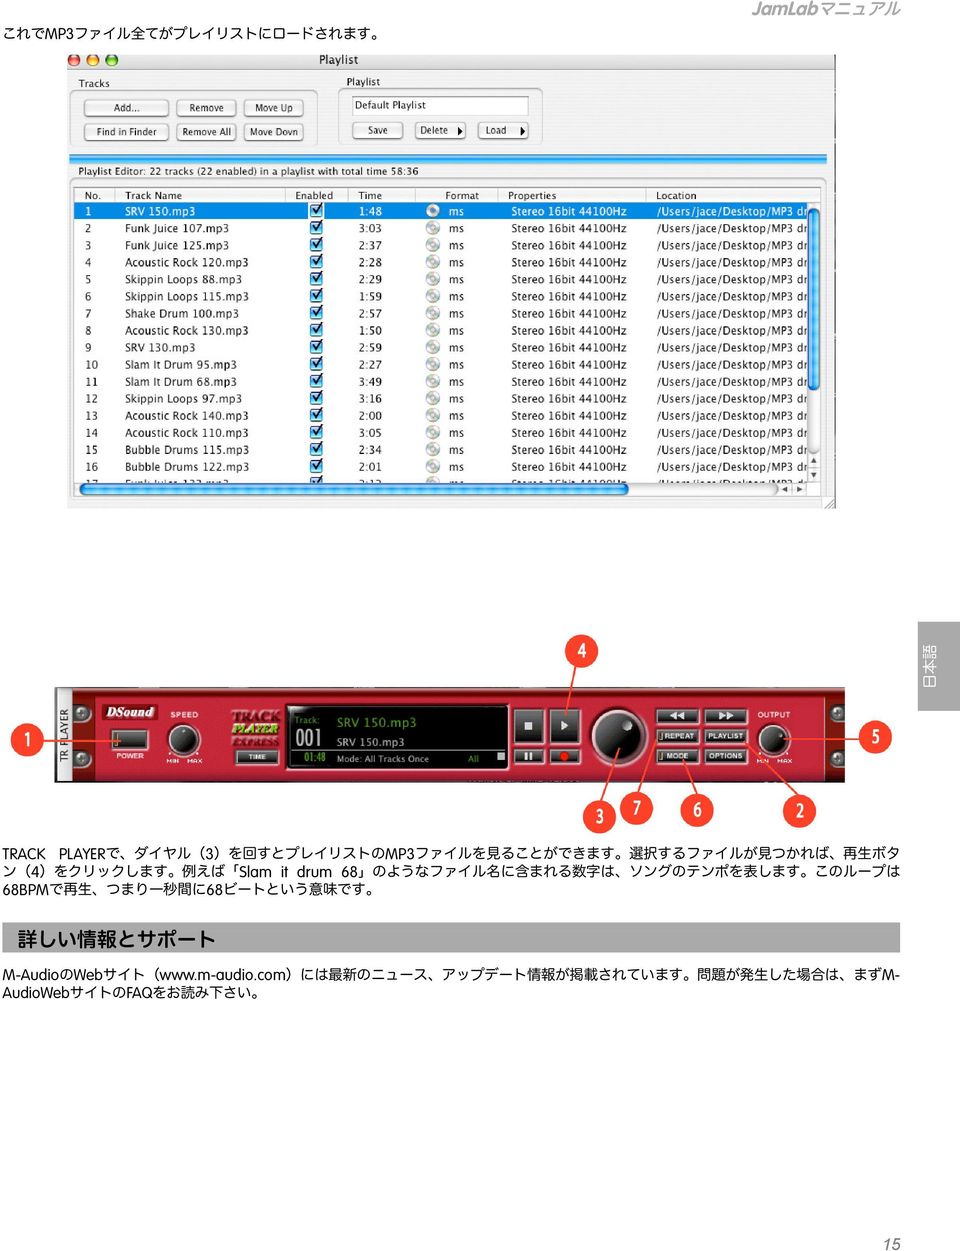 68BPM 68 M-Audio Web www.